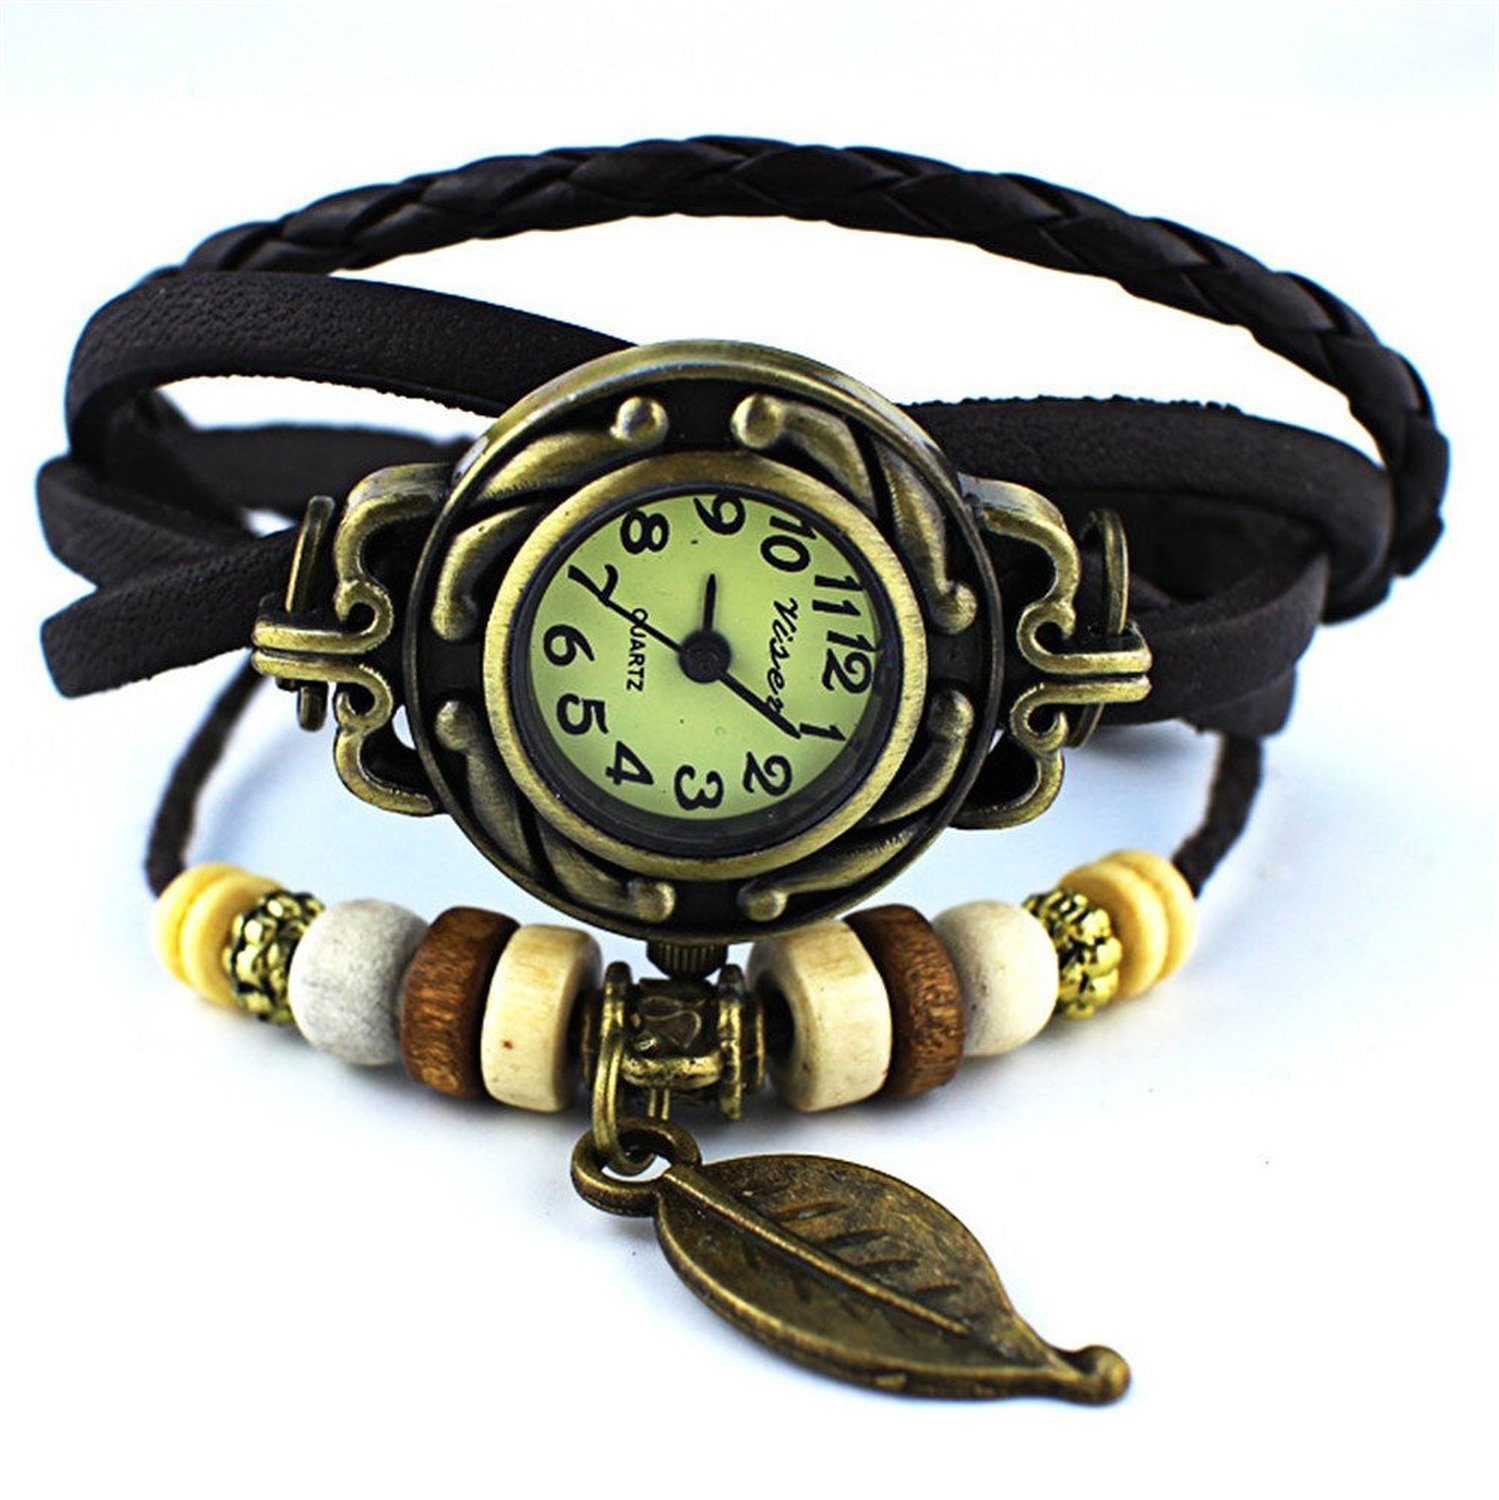 yunanwa Pack of 6 Women's Watches Vintage Wrap Around Bead Leaf Bracelet Quartz Wholesale Set